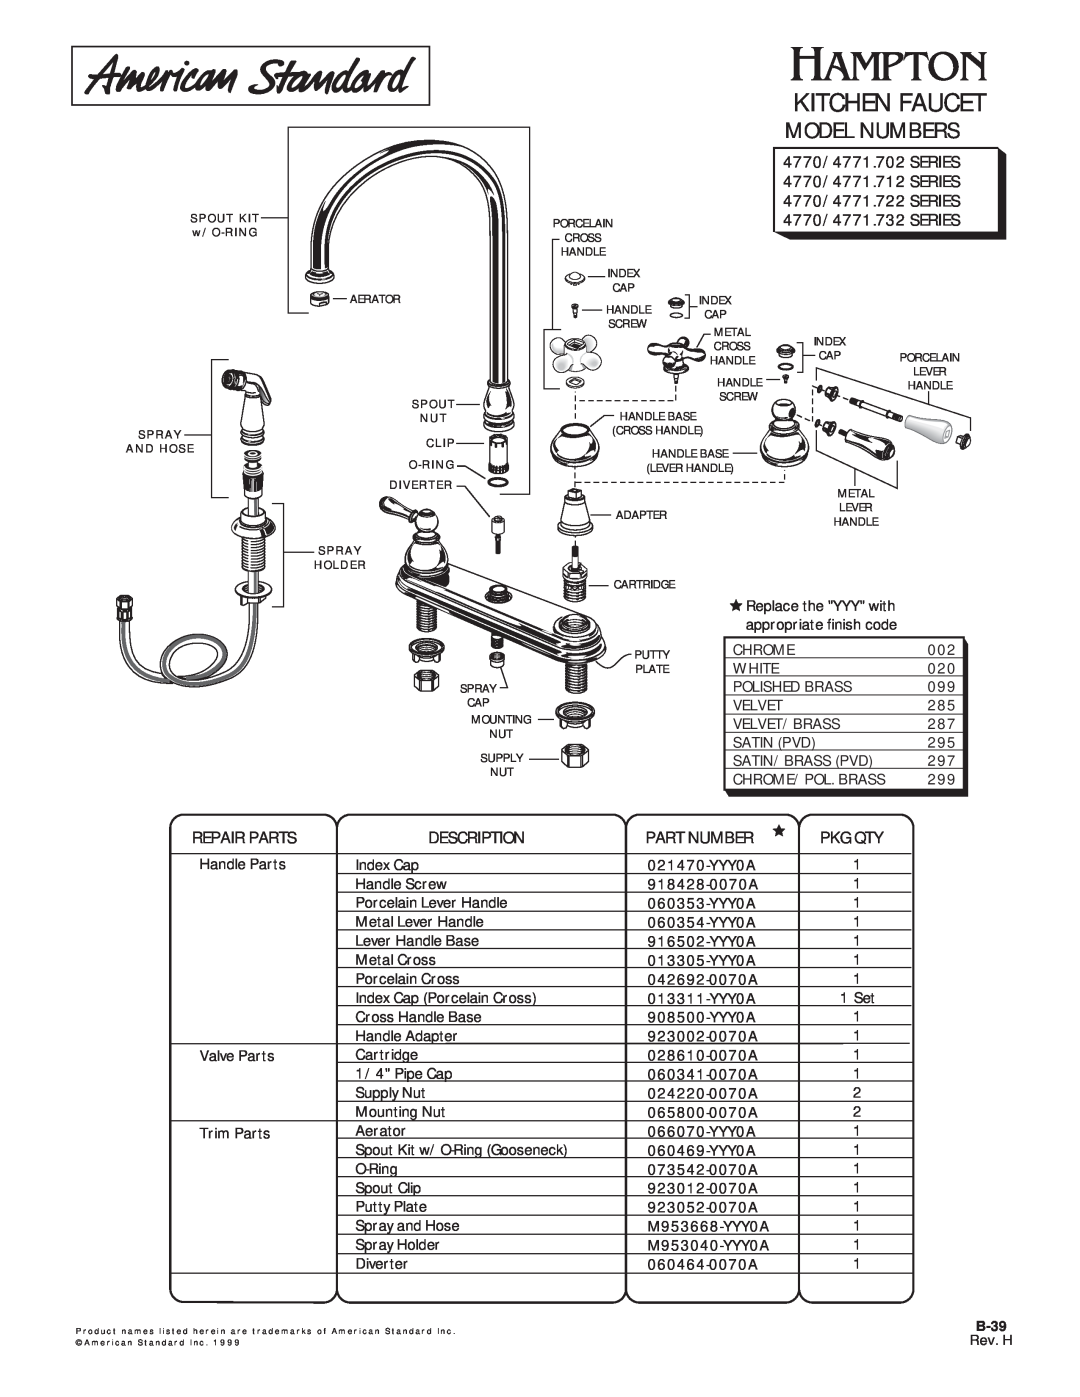 American Standard 4770.722 SERIES manual Kitchen Faucet, Model Numbers, 4770/4771.702 SERIES 4770/4771.712 SERIES, Pkg Qty 